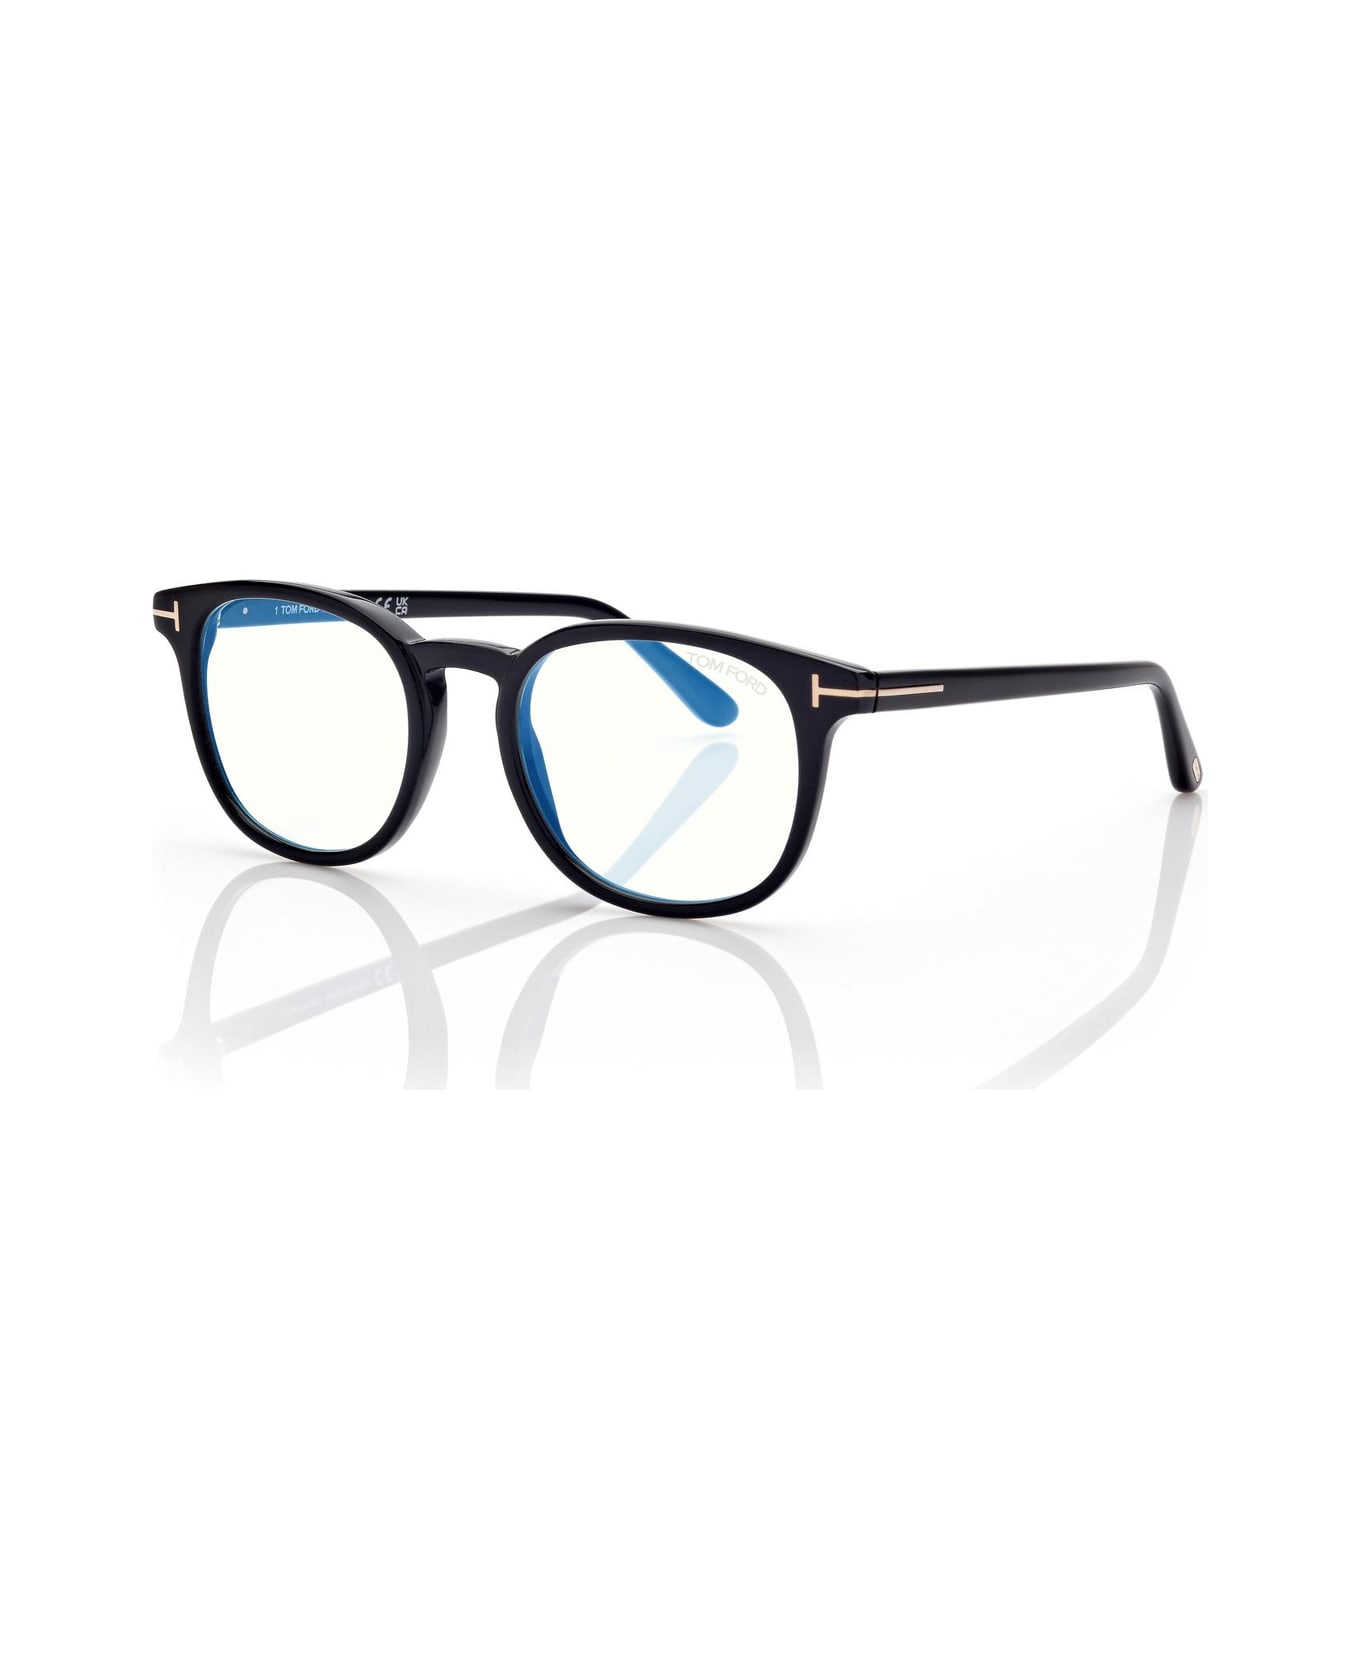 Tom Ford Eyewear Ft5819 Glasses - Nero